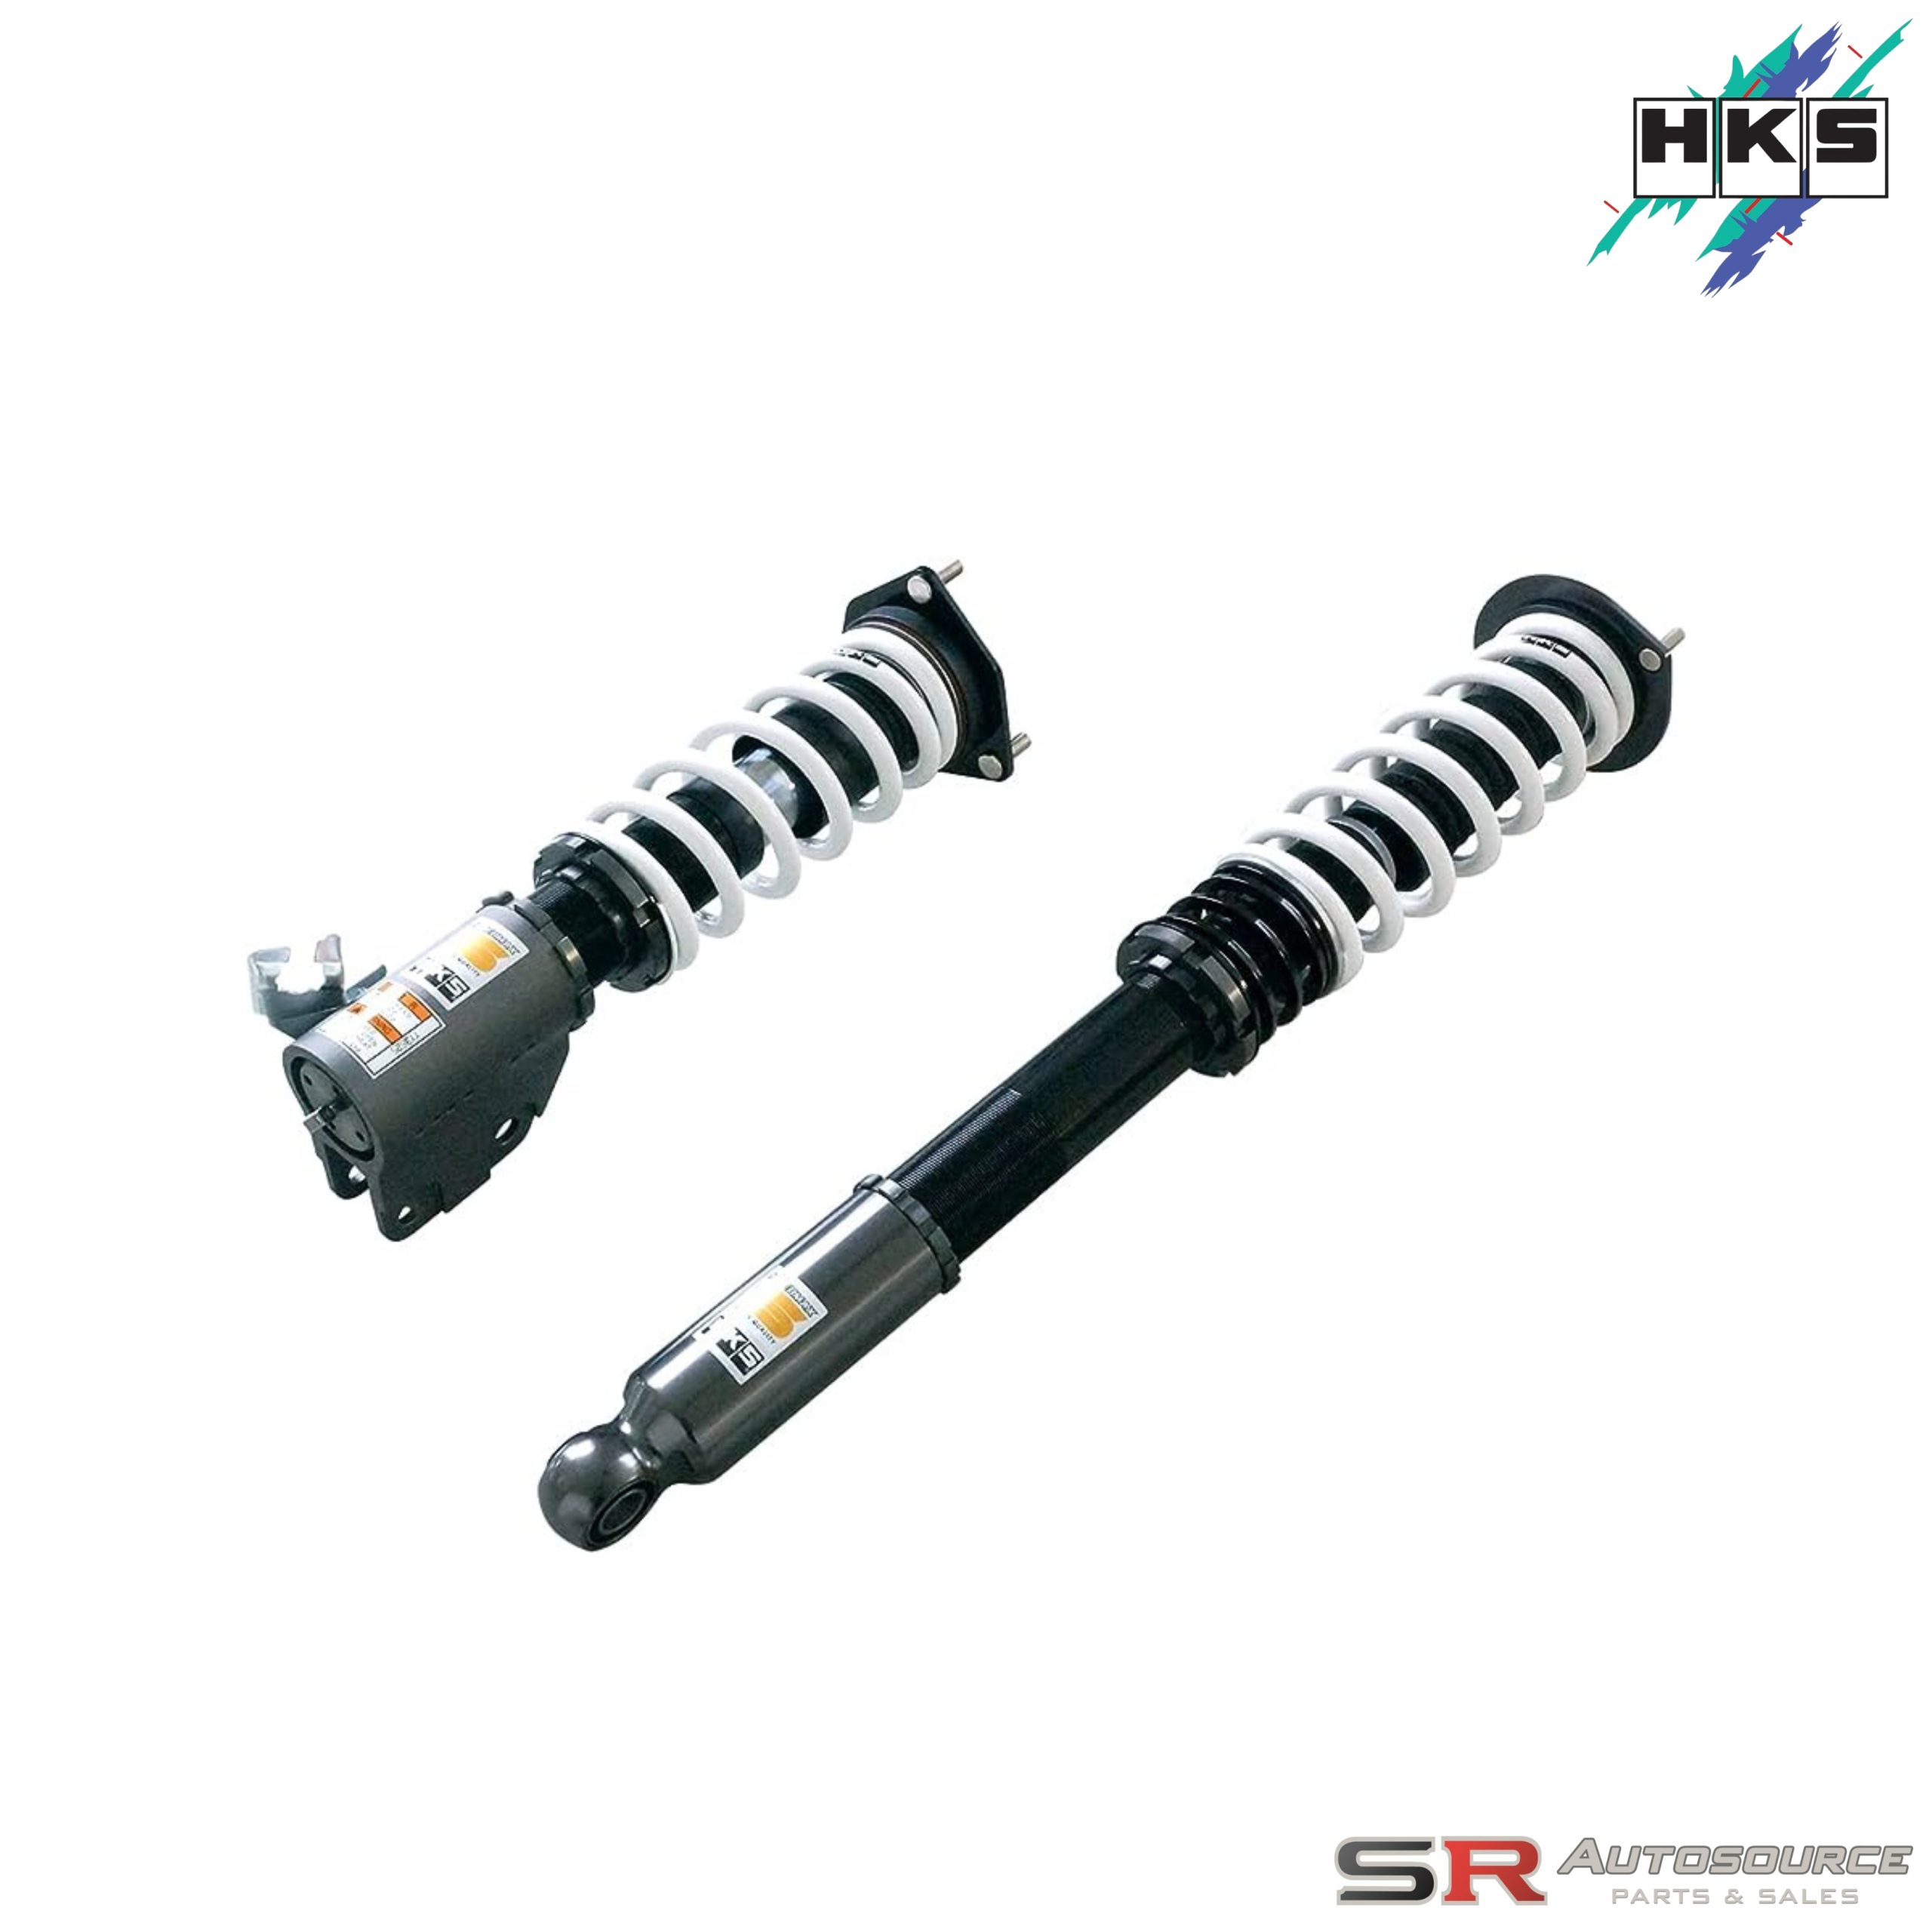 HKS Hipermax S Coilover Suspension Kit Skyline R33 and R34 GTR